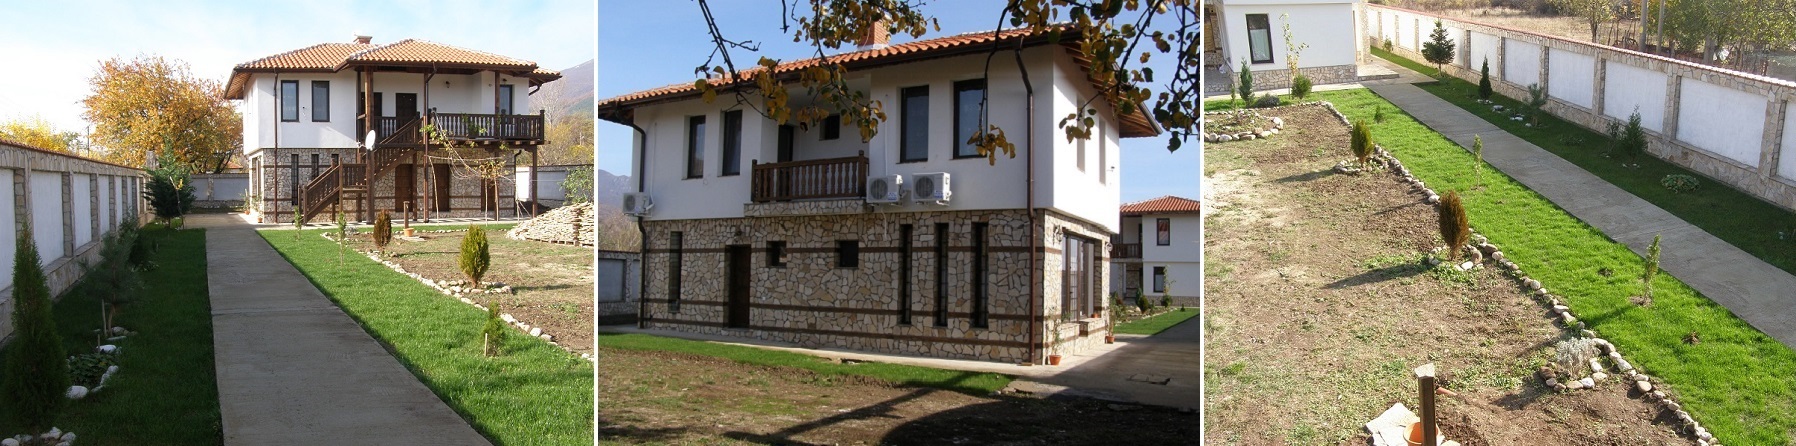 Къщи под балкана